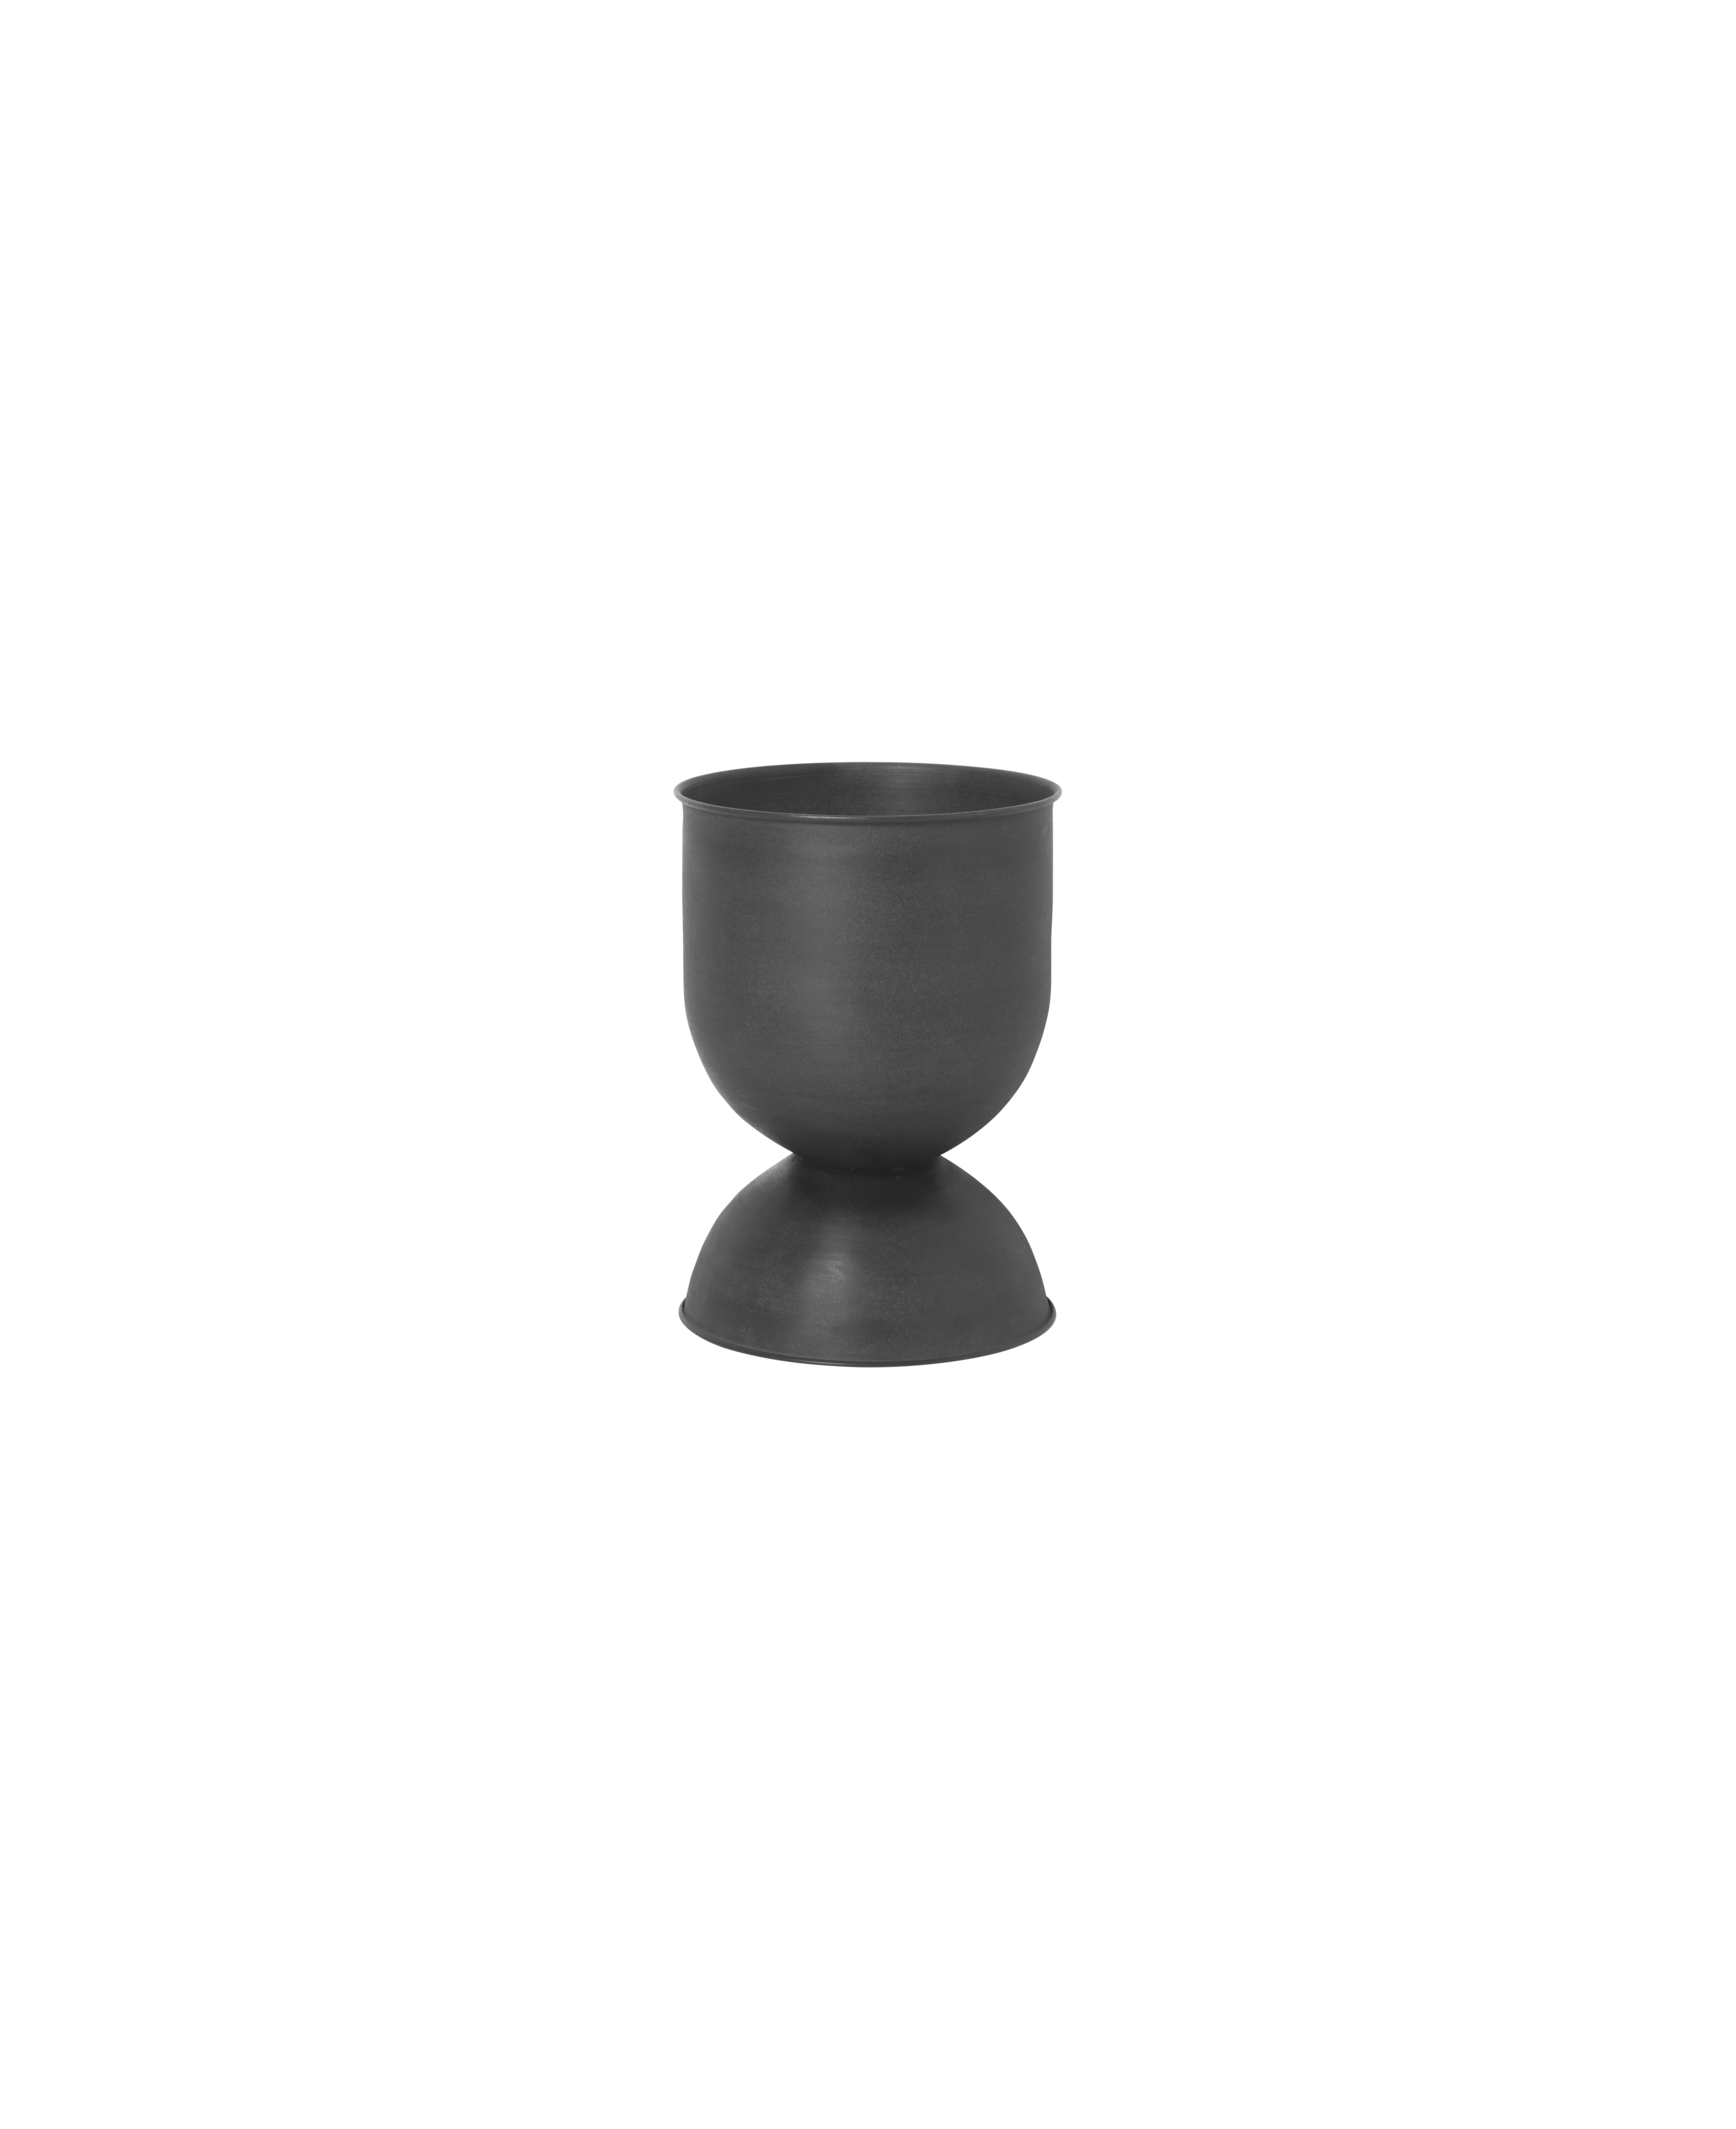 Ferm Living cache pot - sablier - Hourglass pot - S